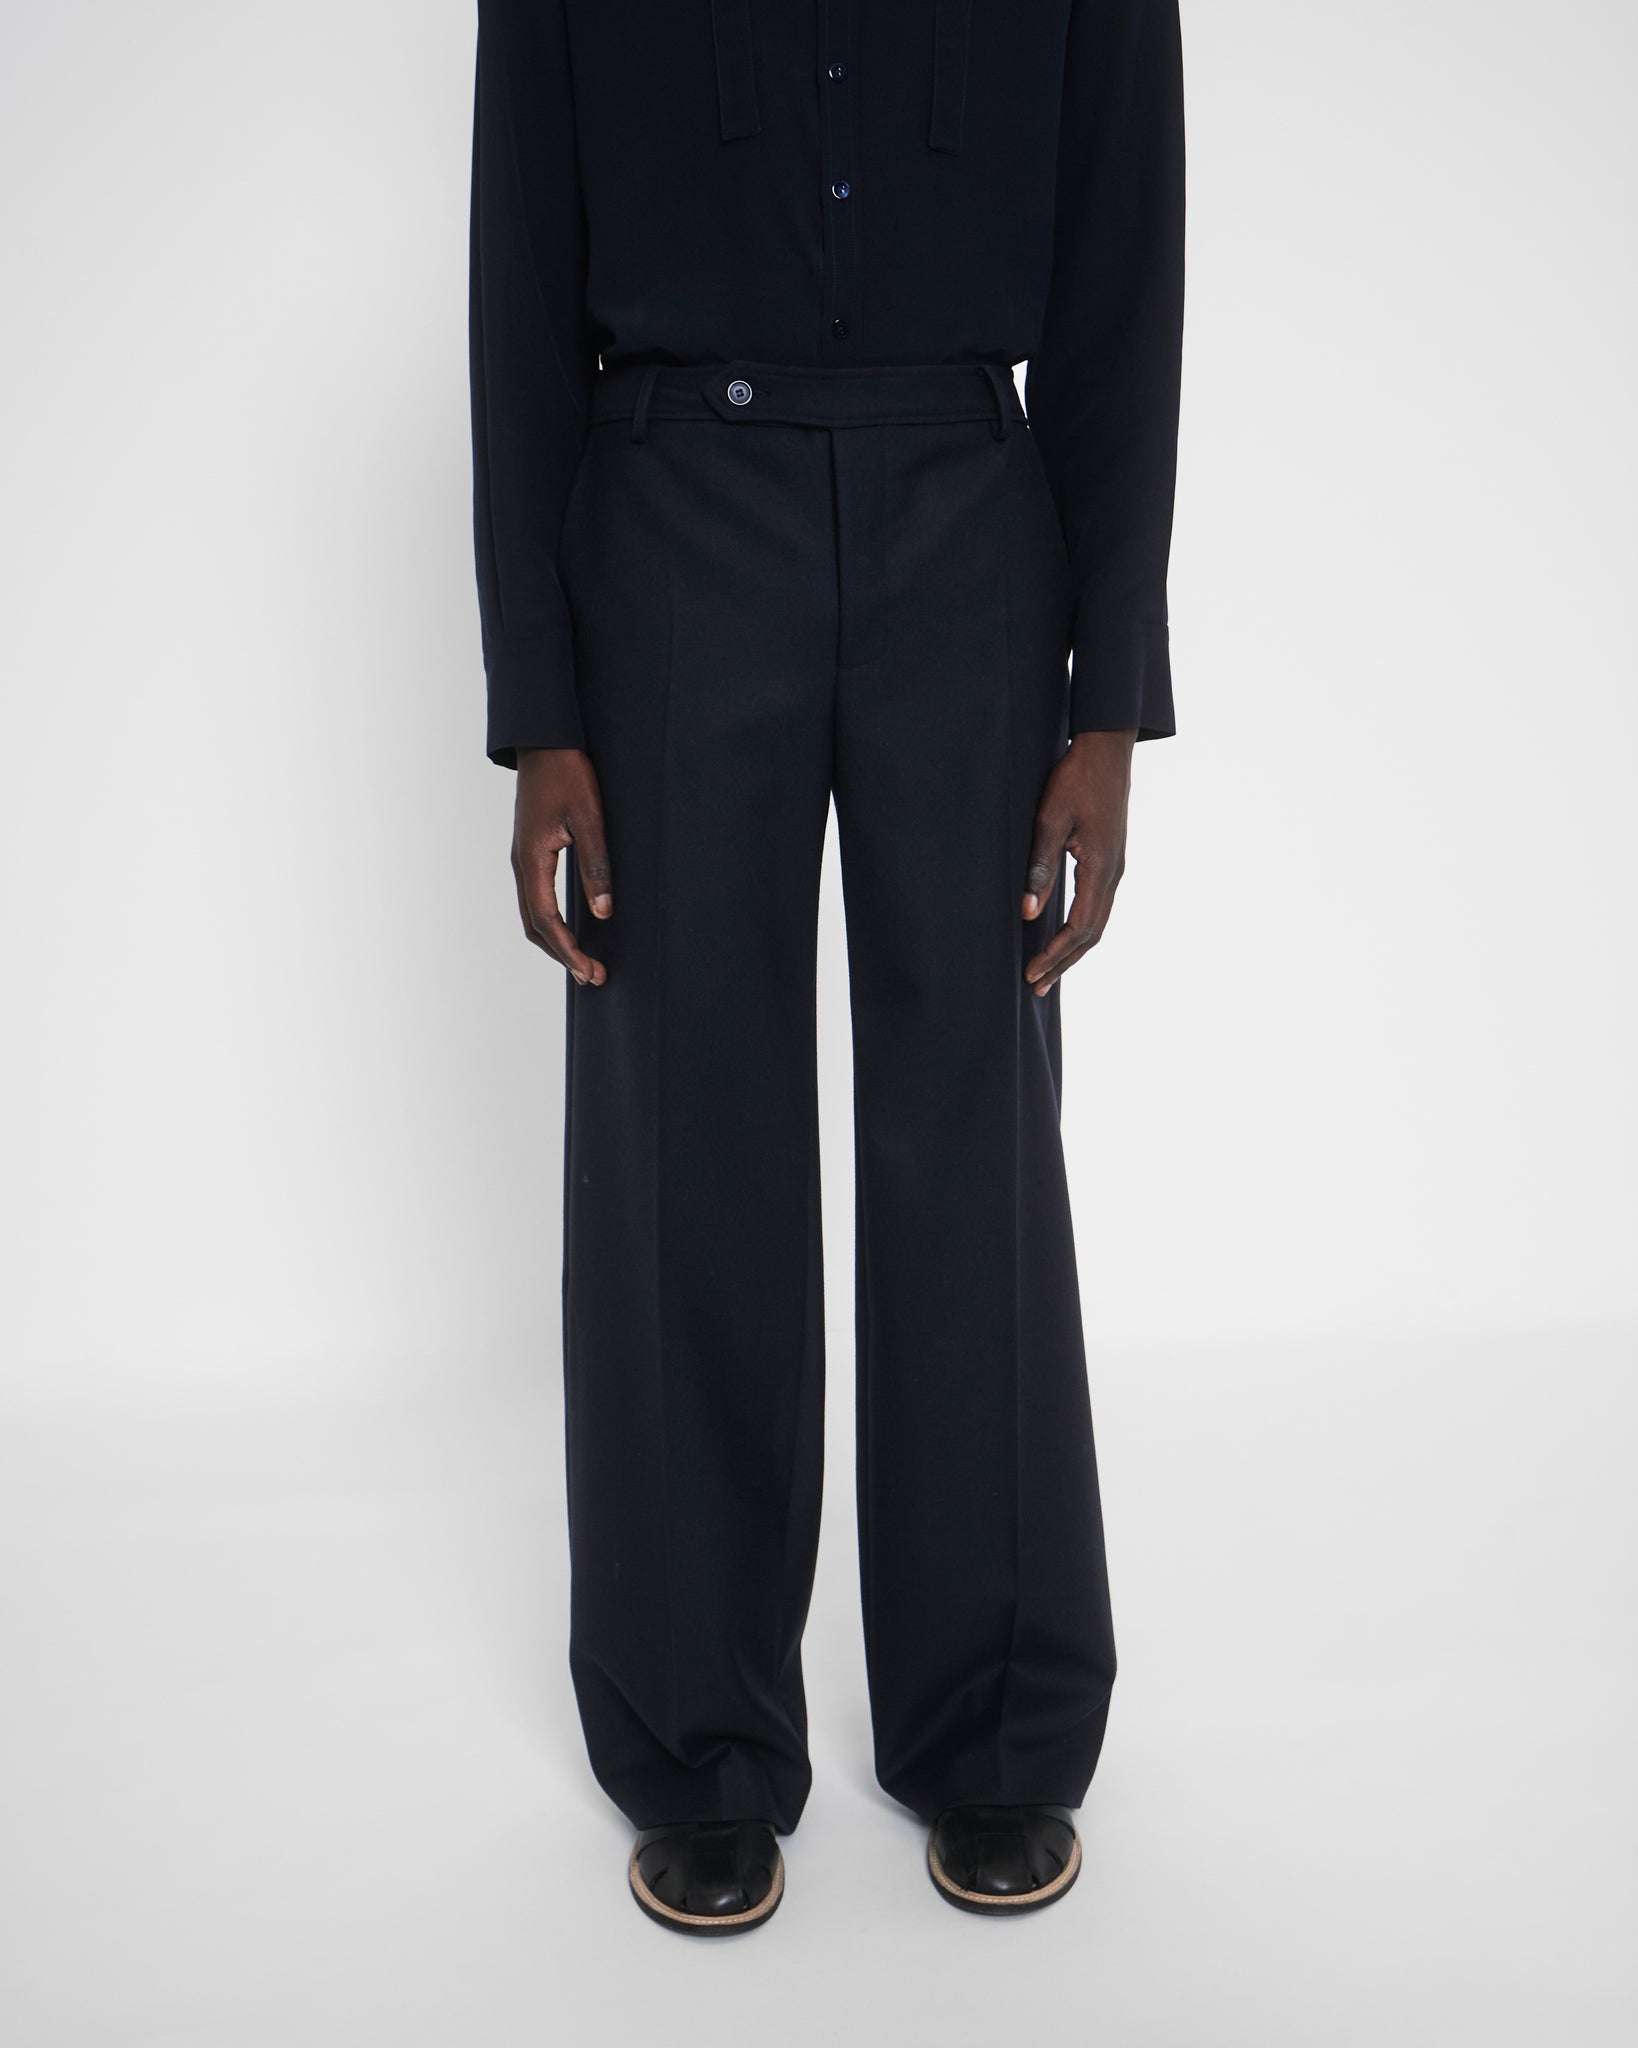 BELGRADO trousers (M) / PRE-ORDER